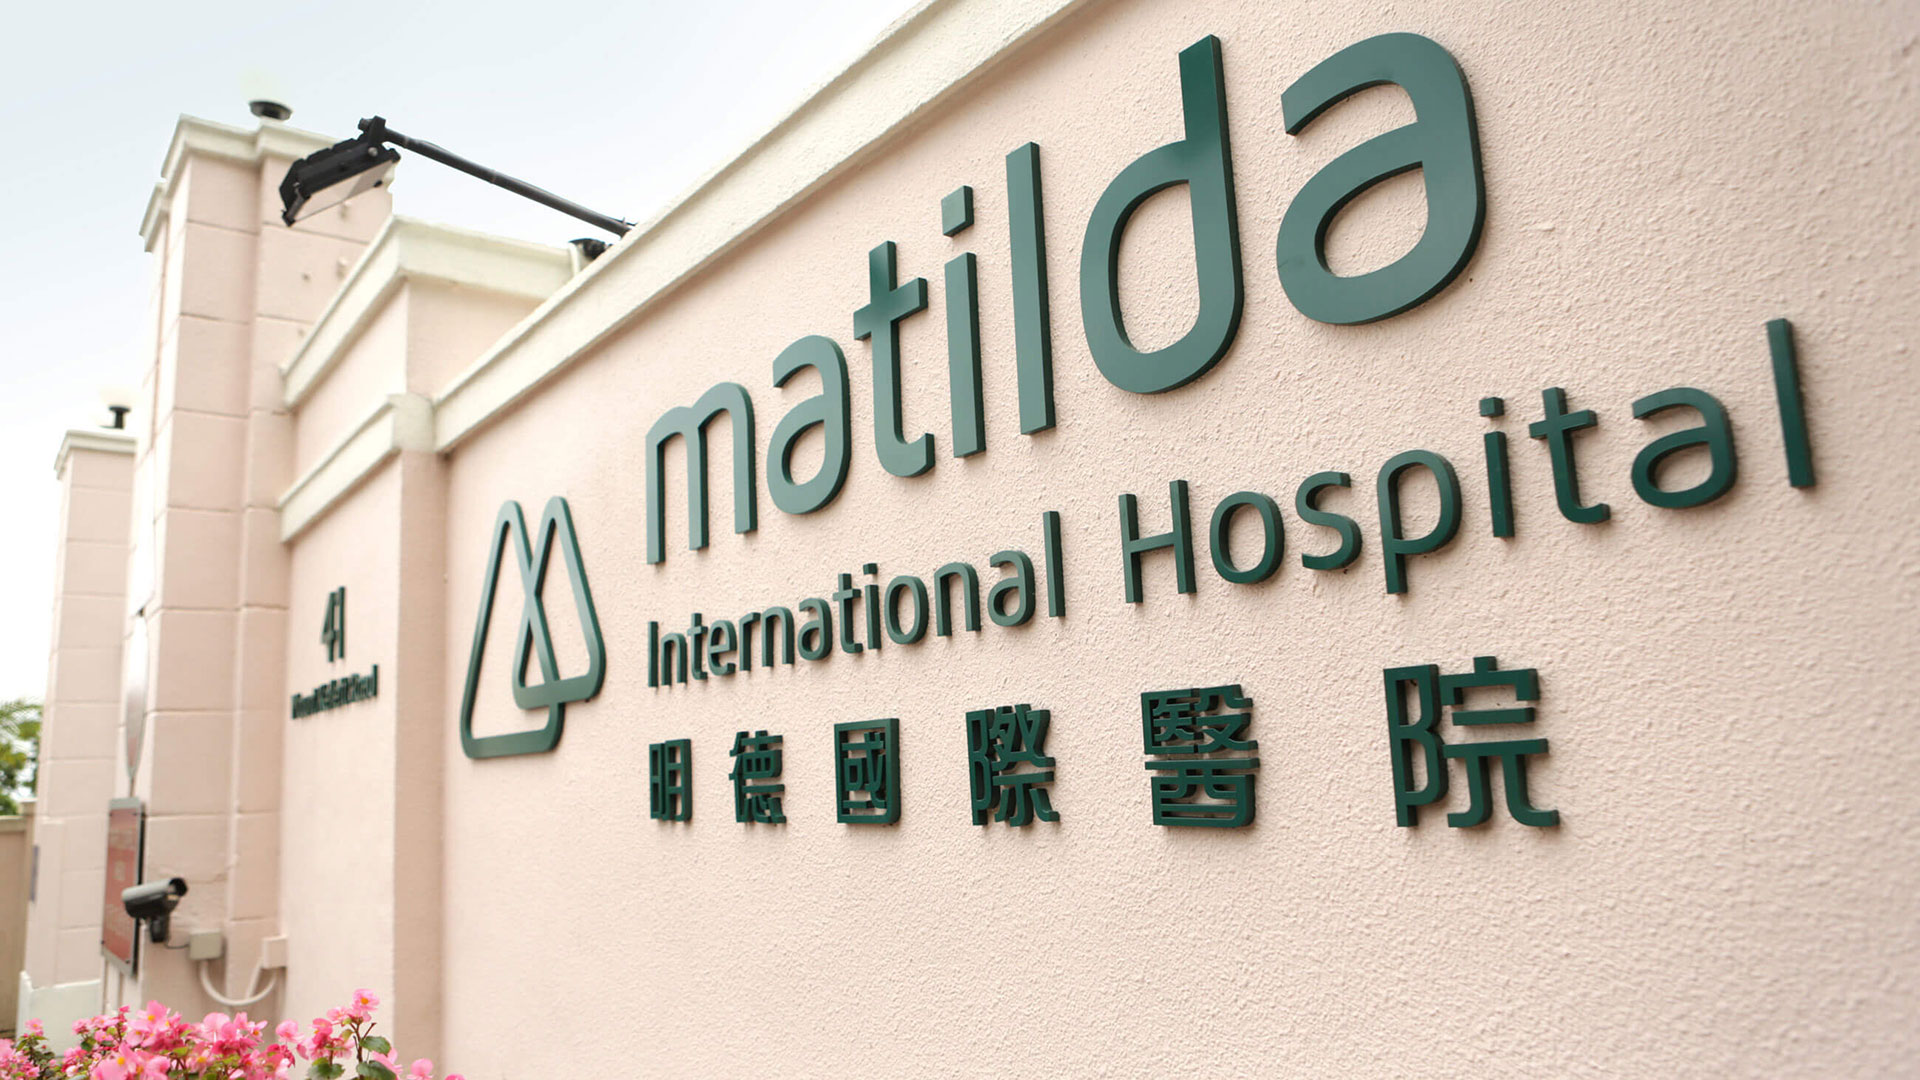 Matilda International Hospital – Brand development